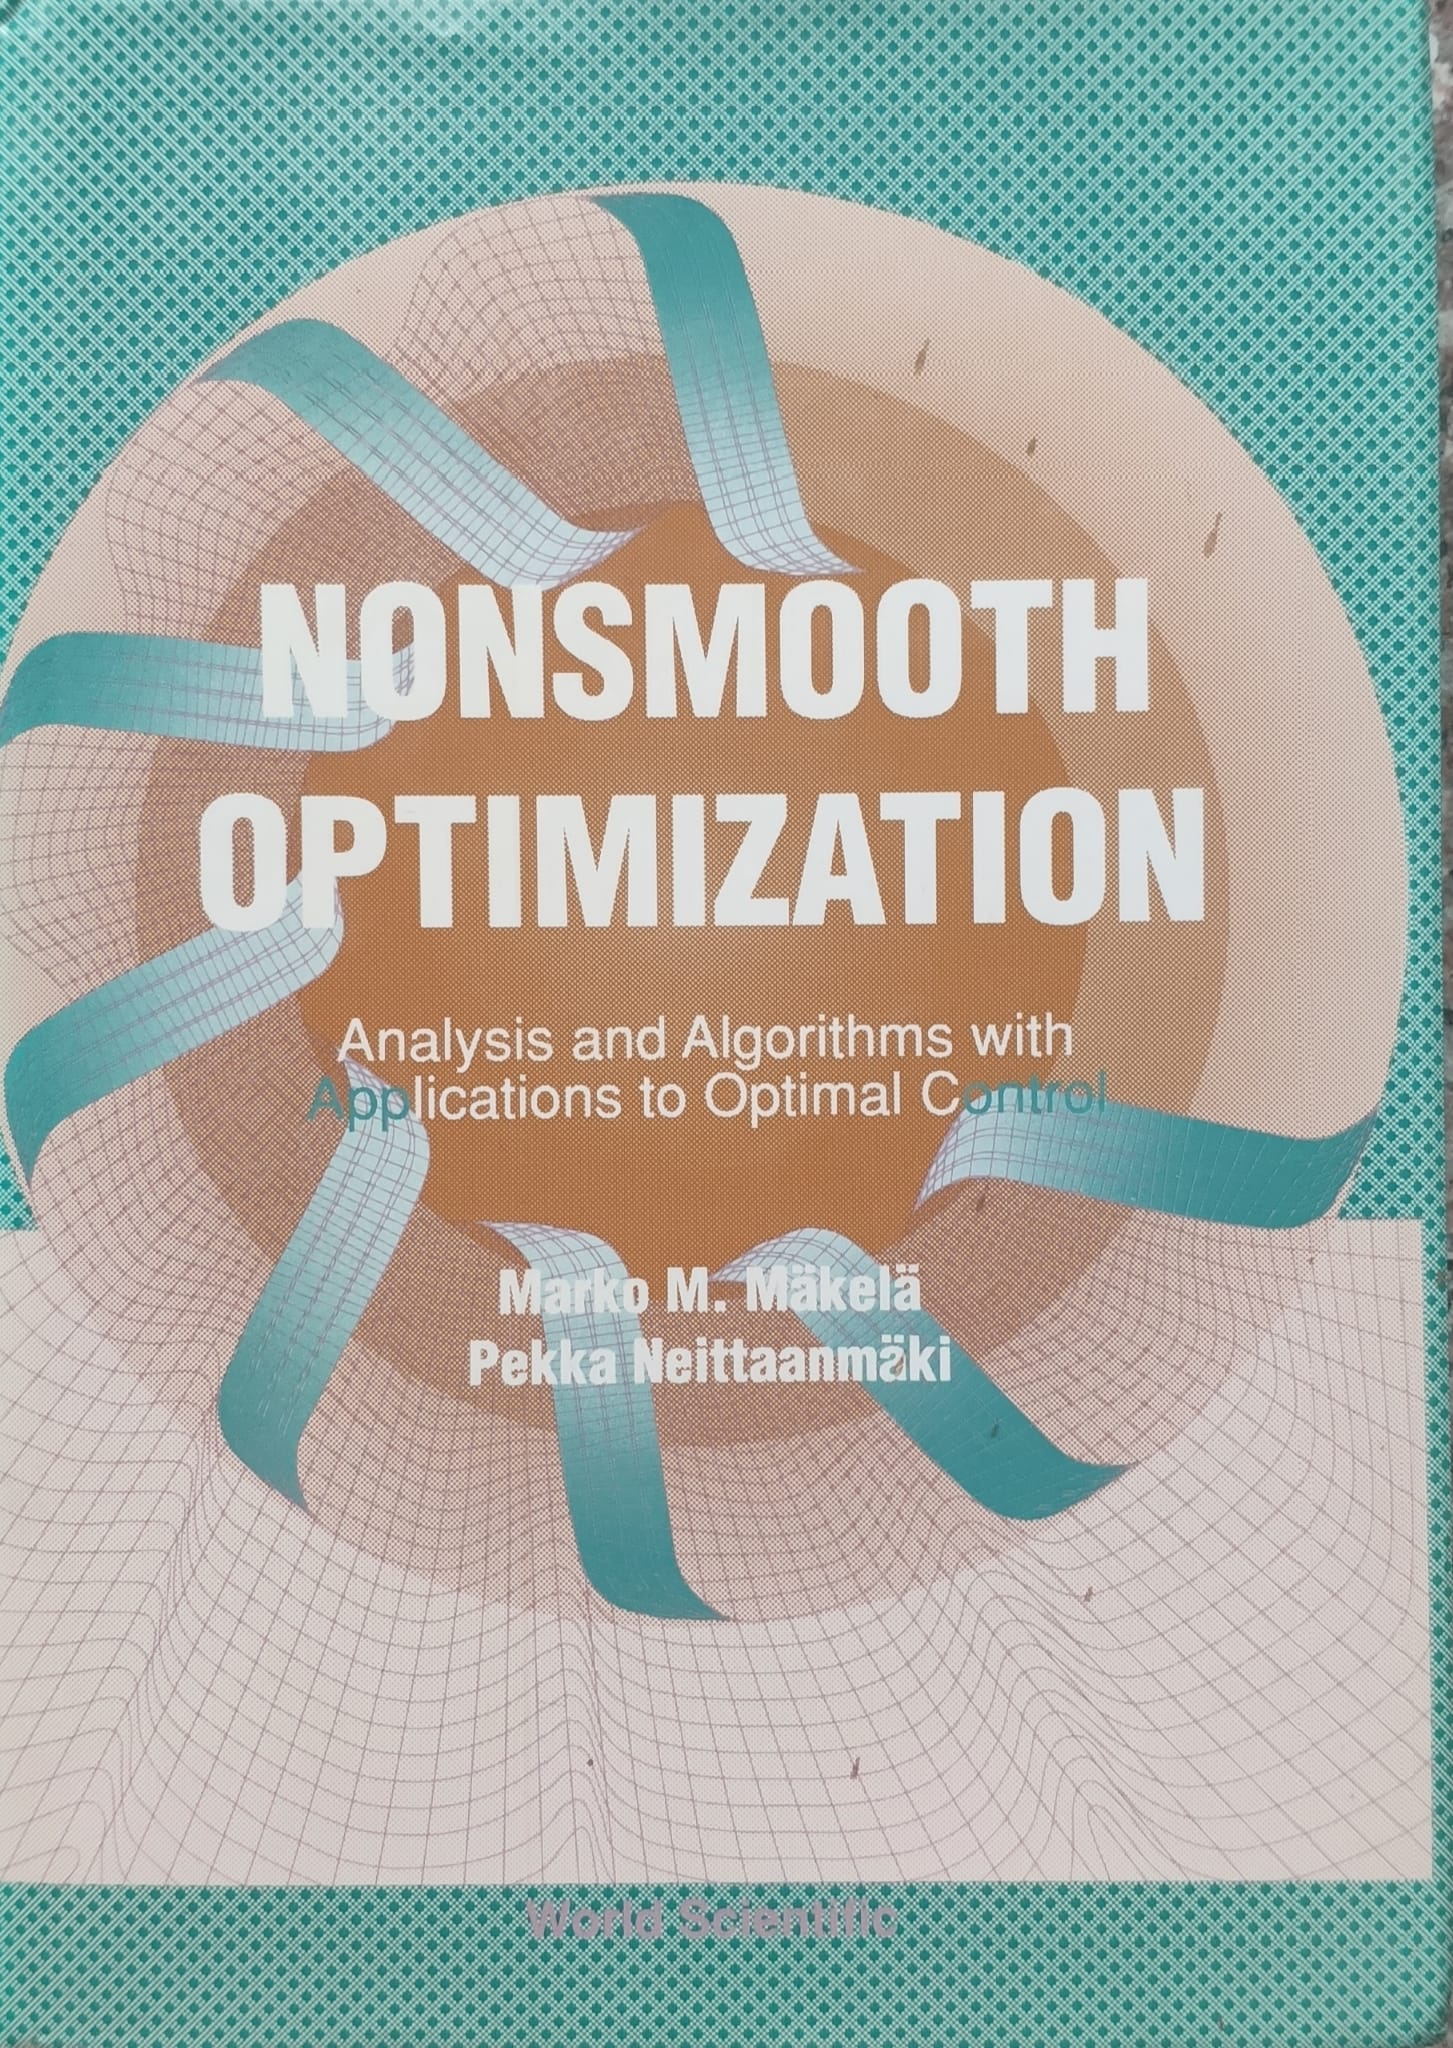 nonsmooth optimization analysis and algorithms with applications to optimal control                  marko m. makela, pekka neittaanmaki                                                                 